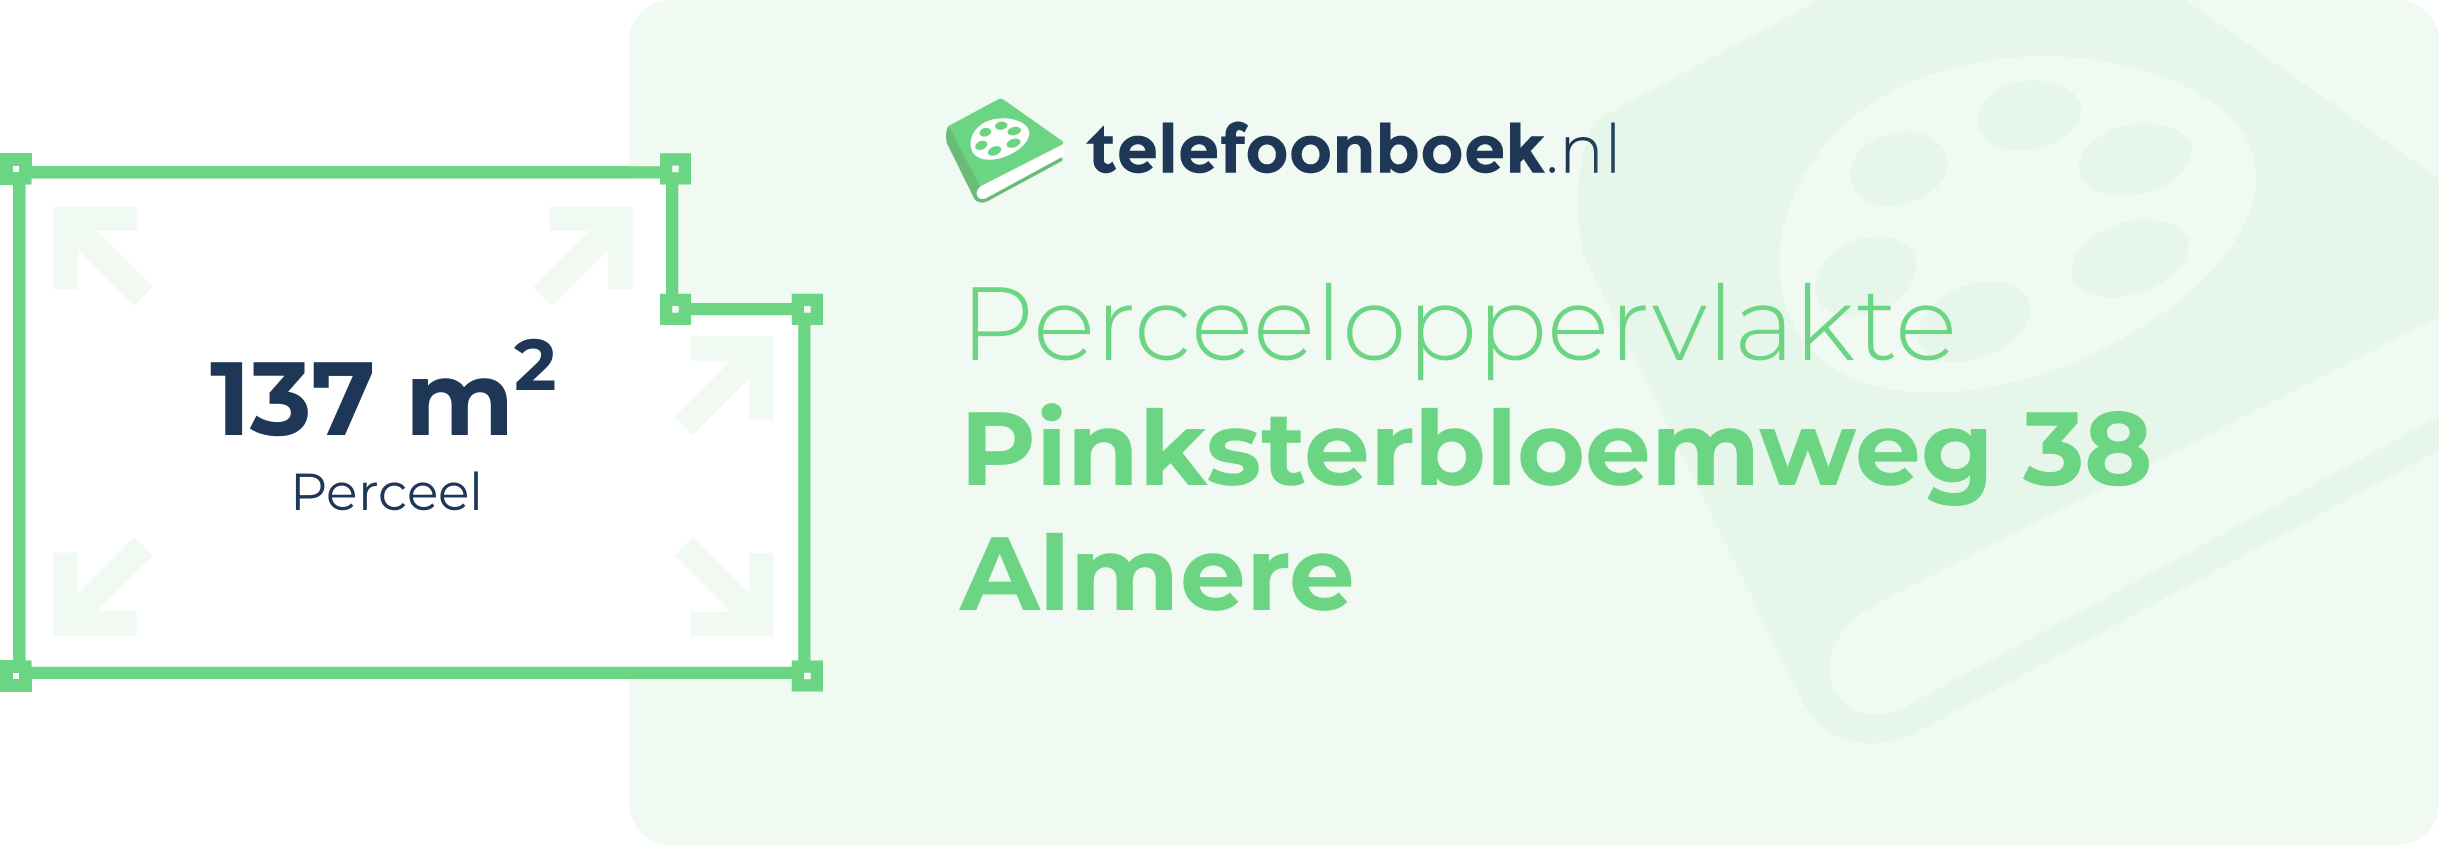 Perceeloppervlakte Pinksterbloemweg 38 Almere